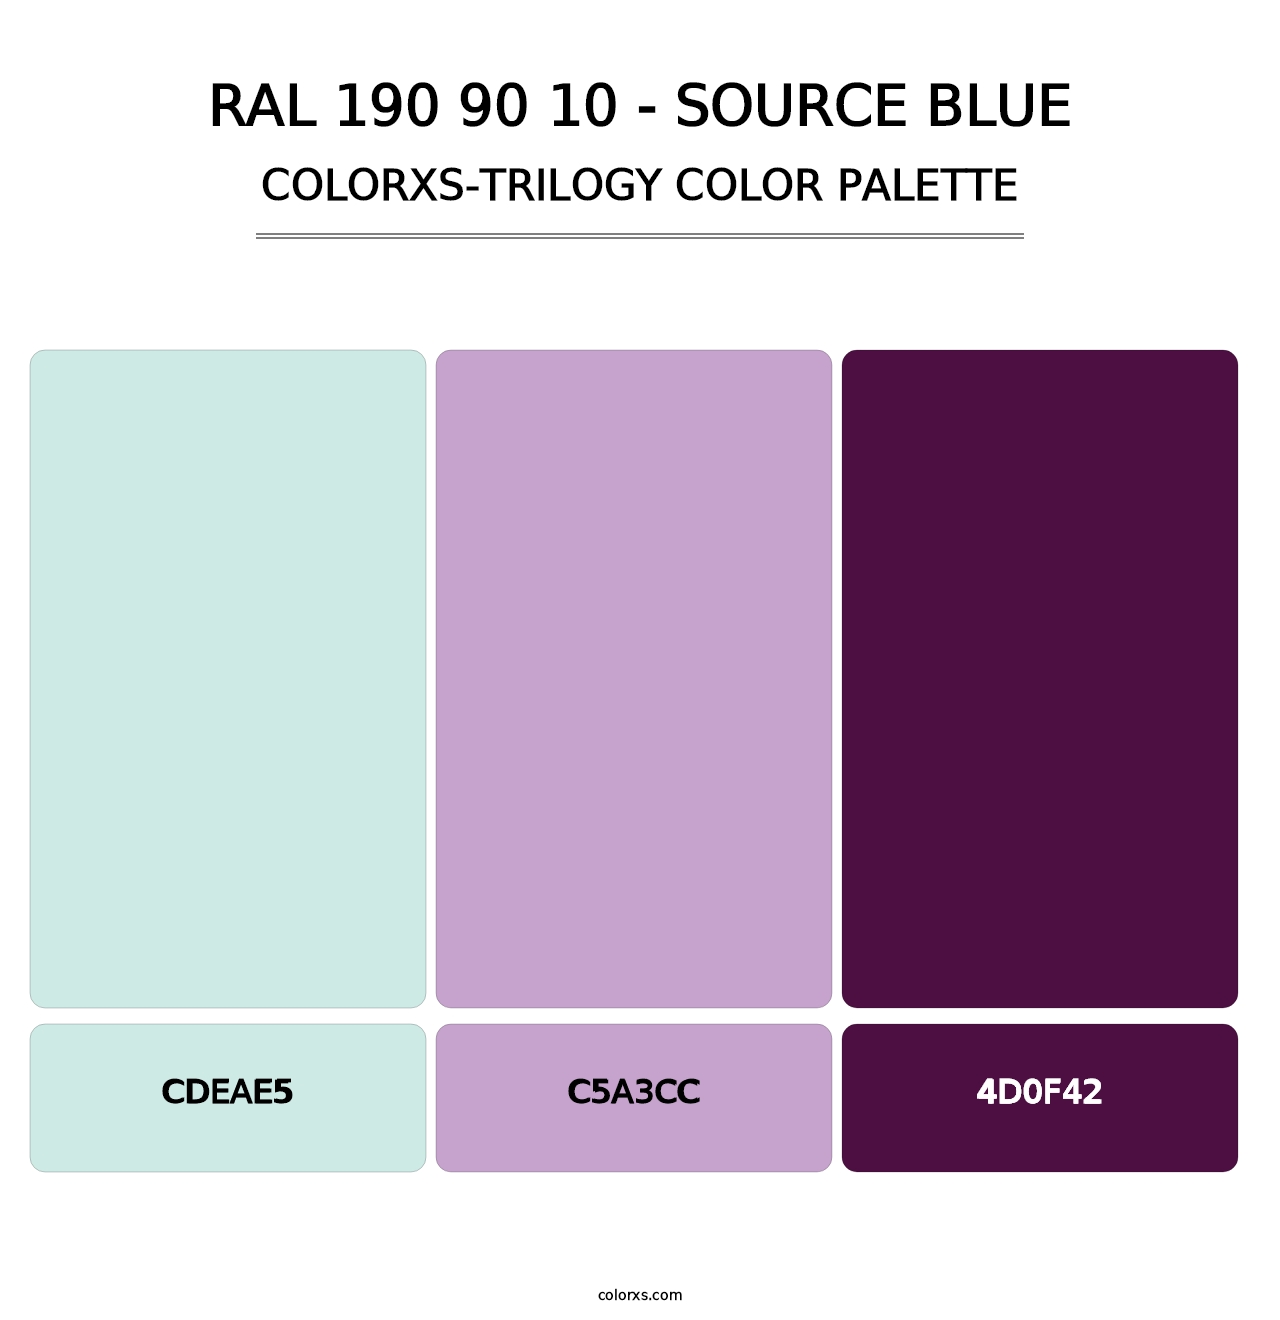 RAL 190 90 10 - Source Blue - Colorxs Trilogy Palette